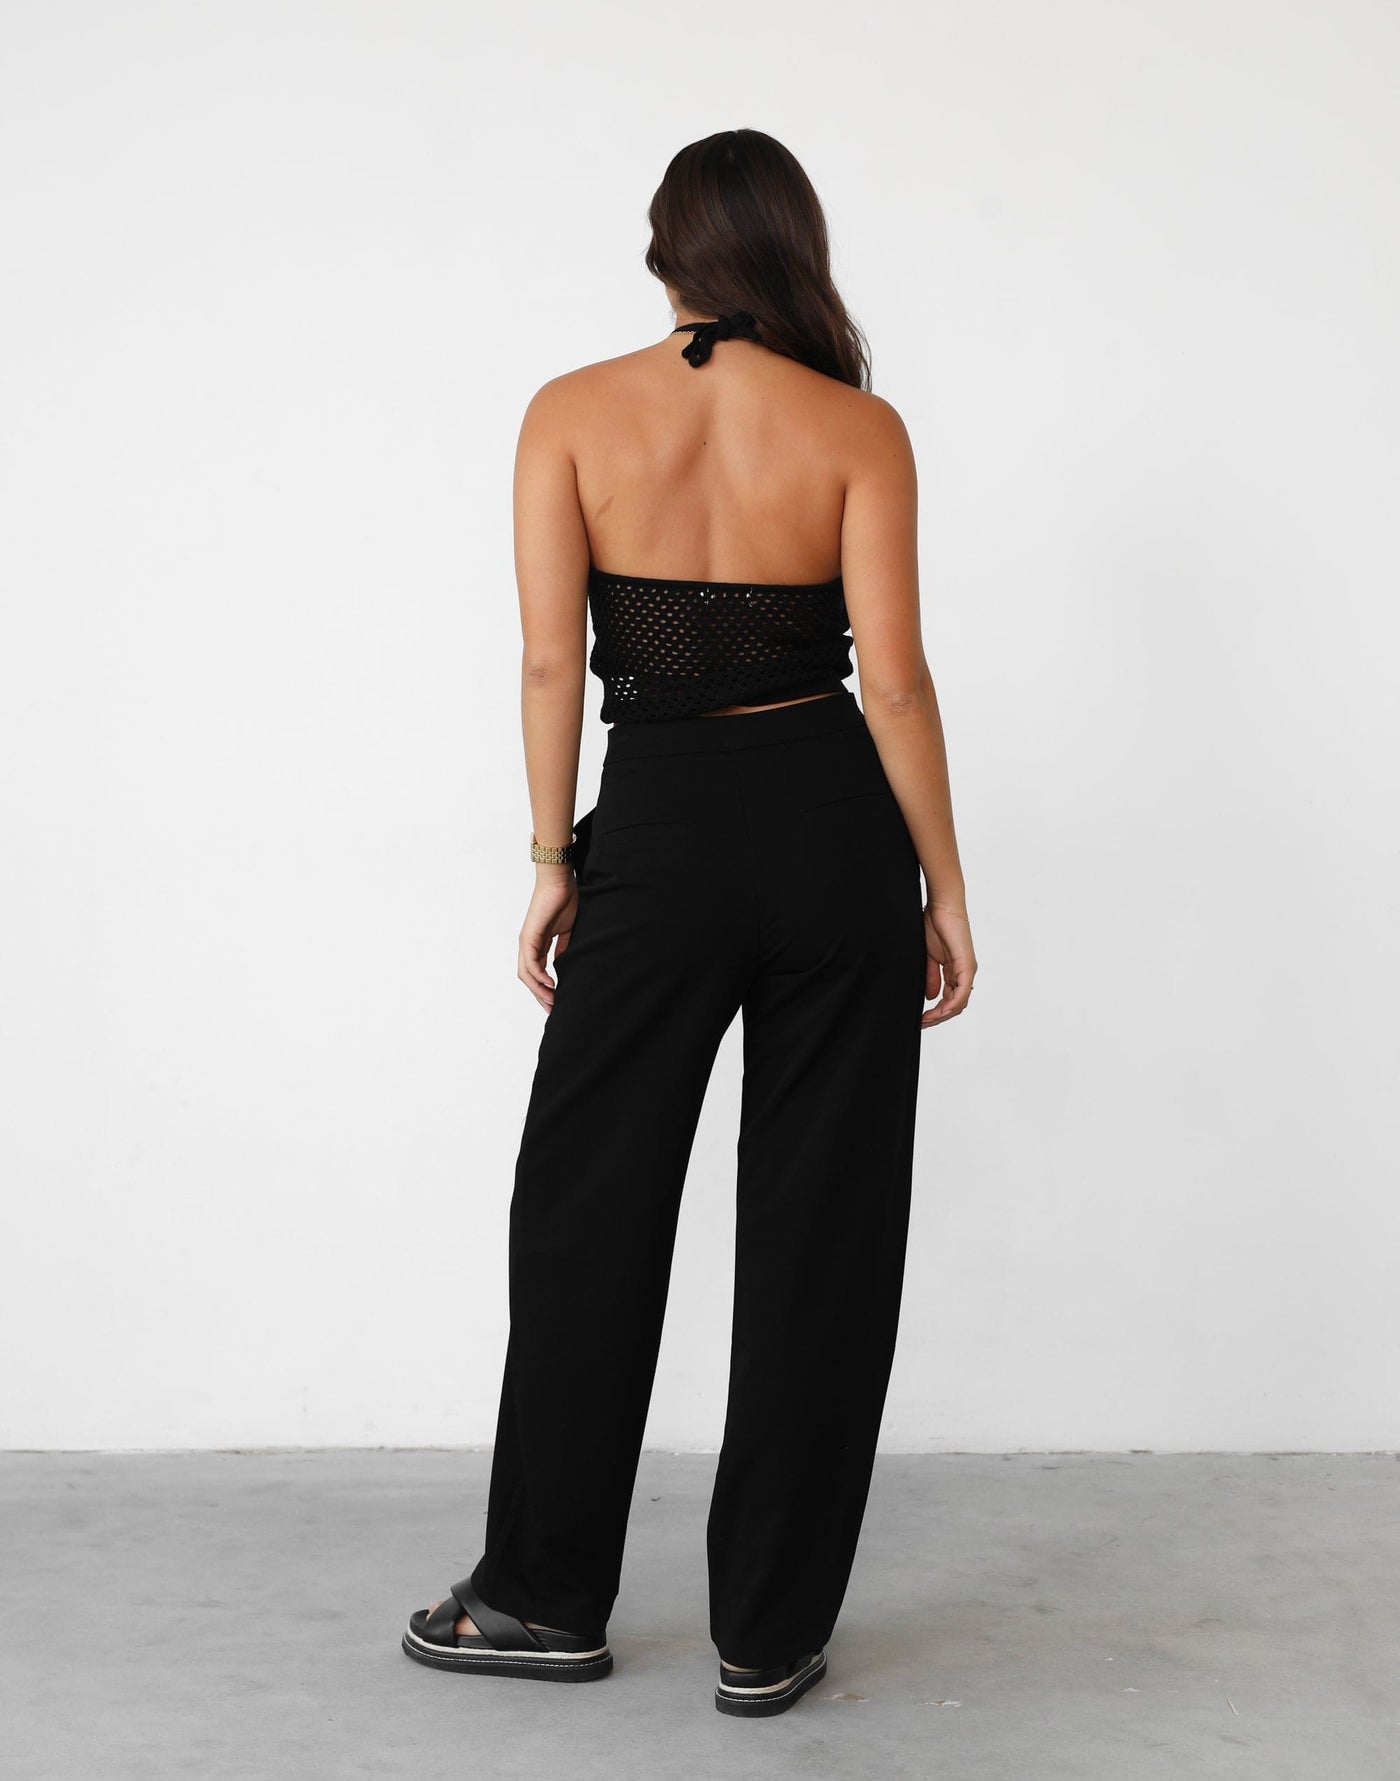 Prestine Top (Black) | Sheer Crochet Top - Women's Top - Charcoal Clothing